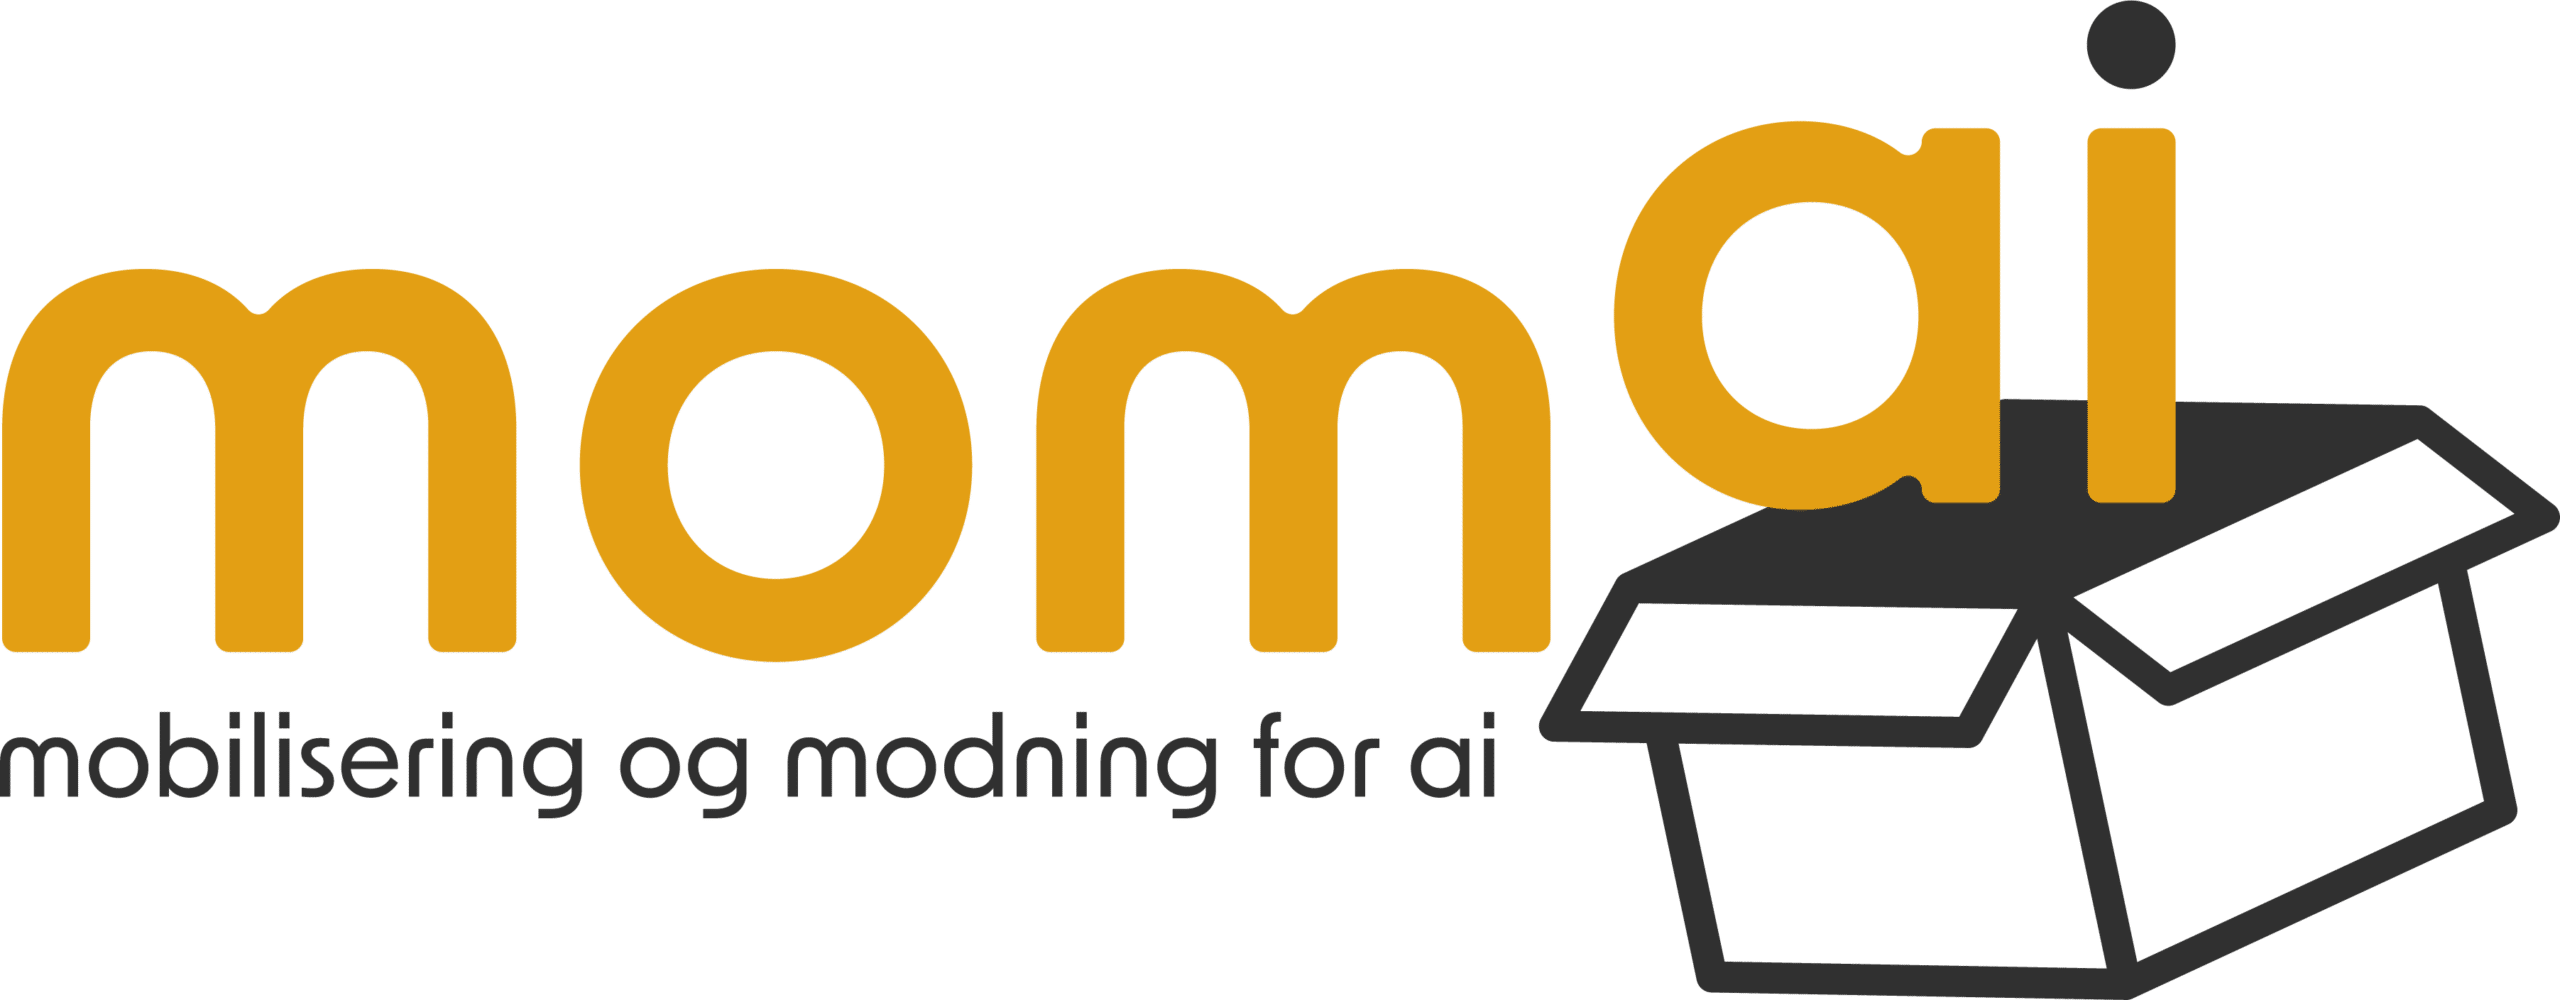 Momai logo